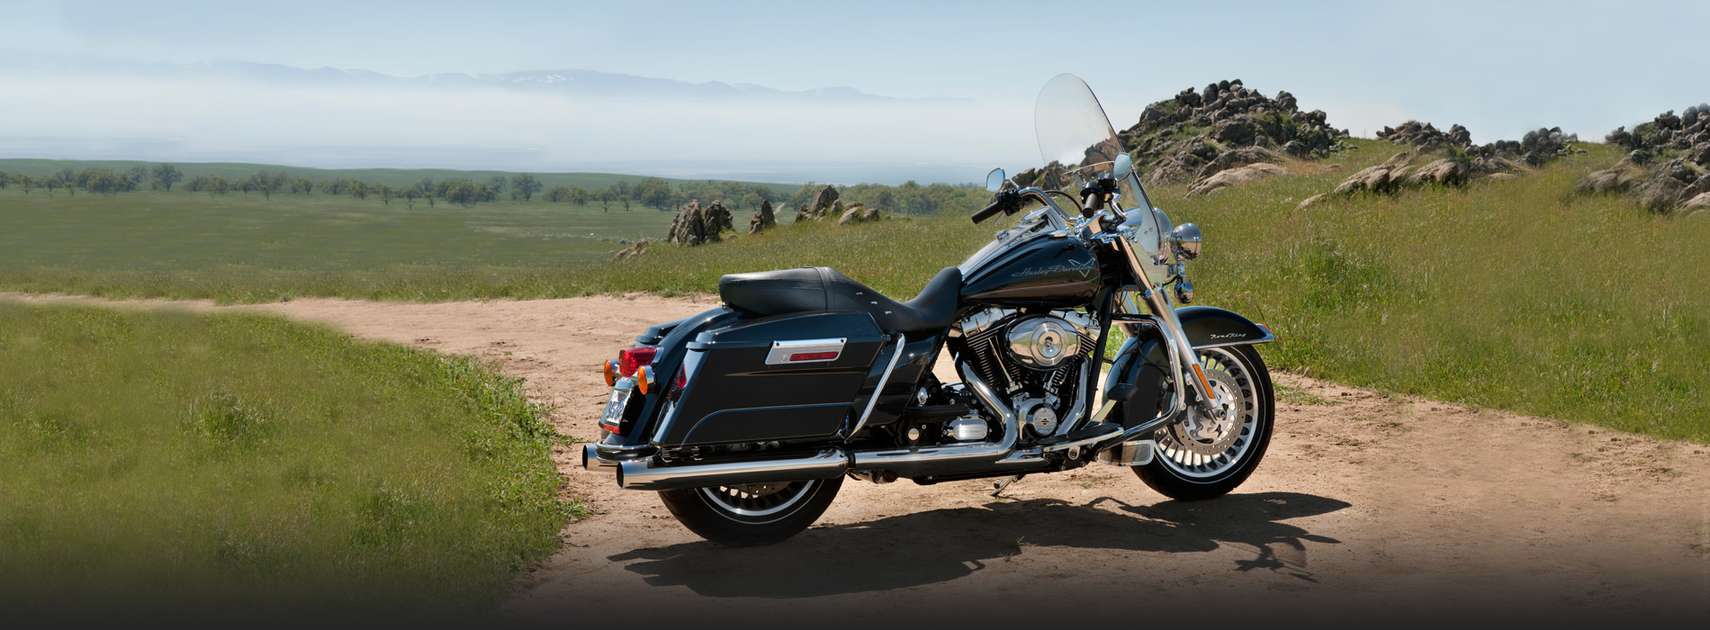 Harley-Davidson Road King #9192163